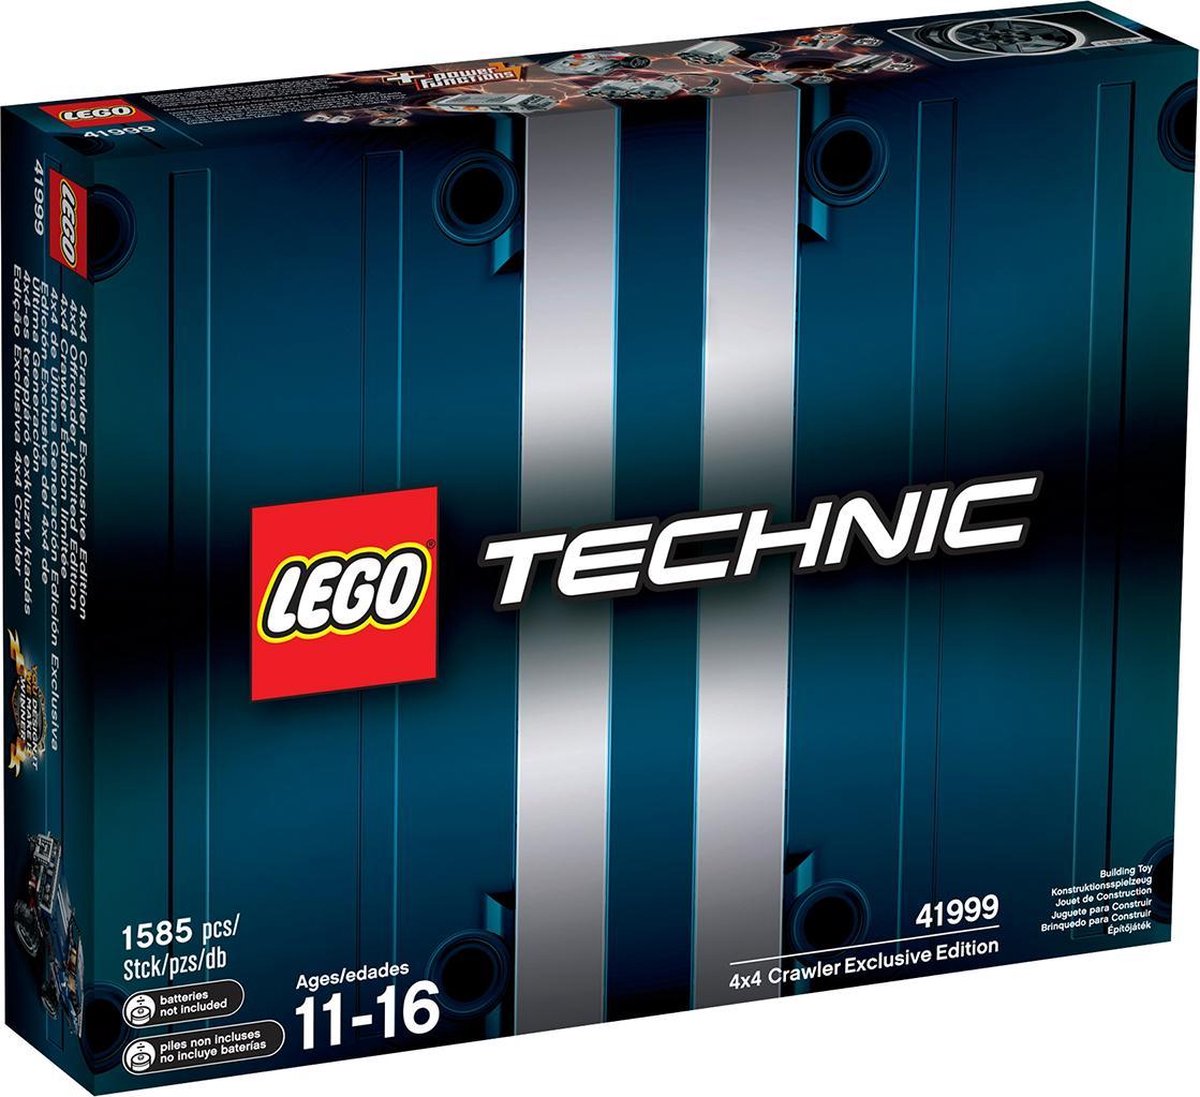 LEGO Technic 4x4 Crawler Exclusive Edition - 41999